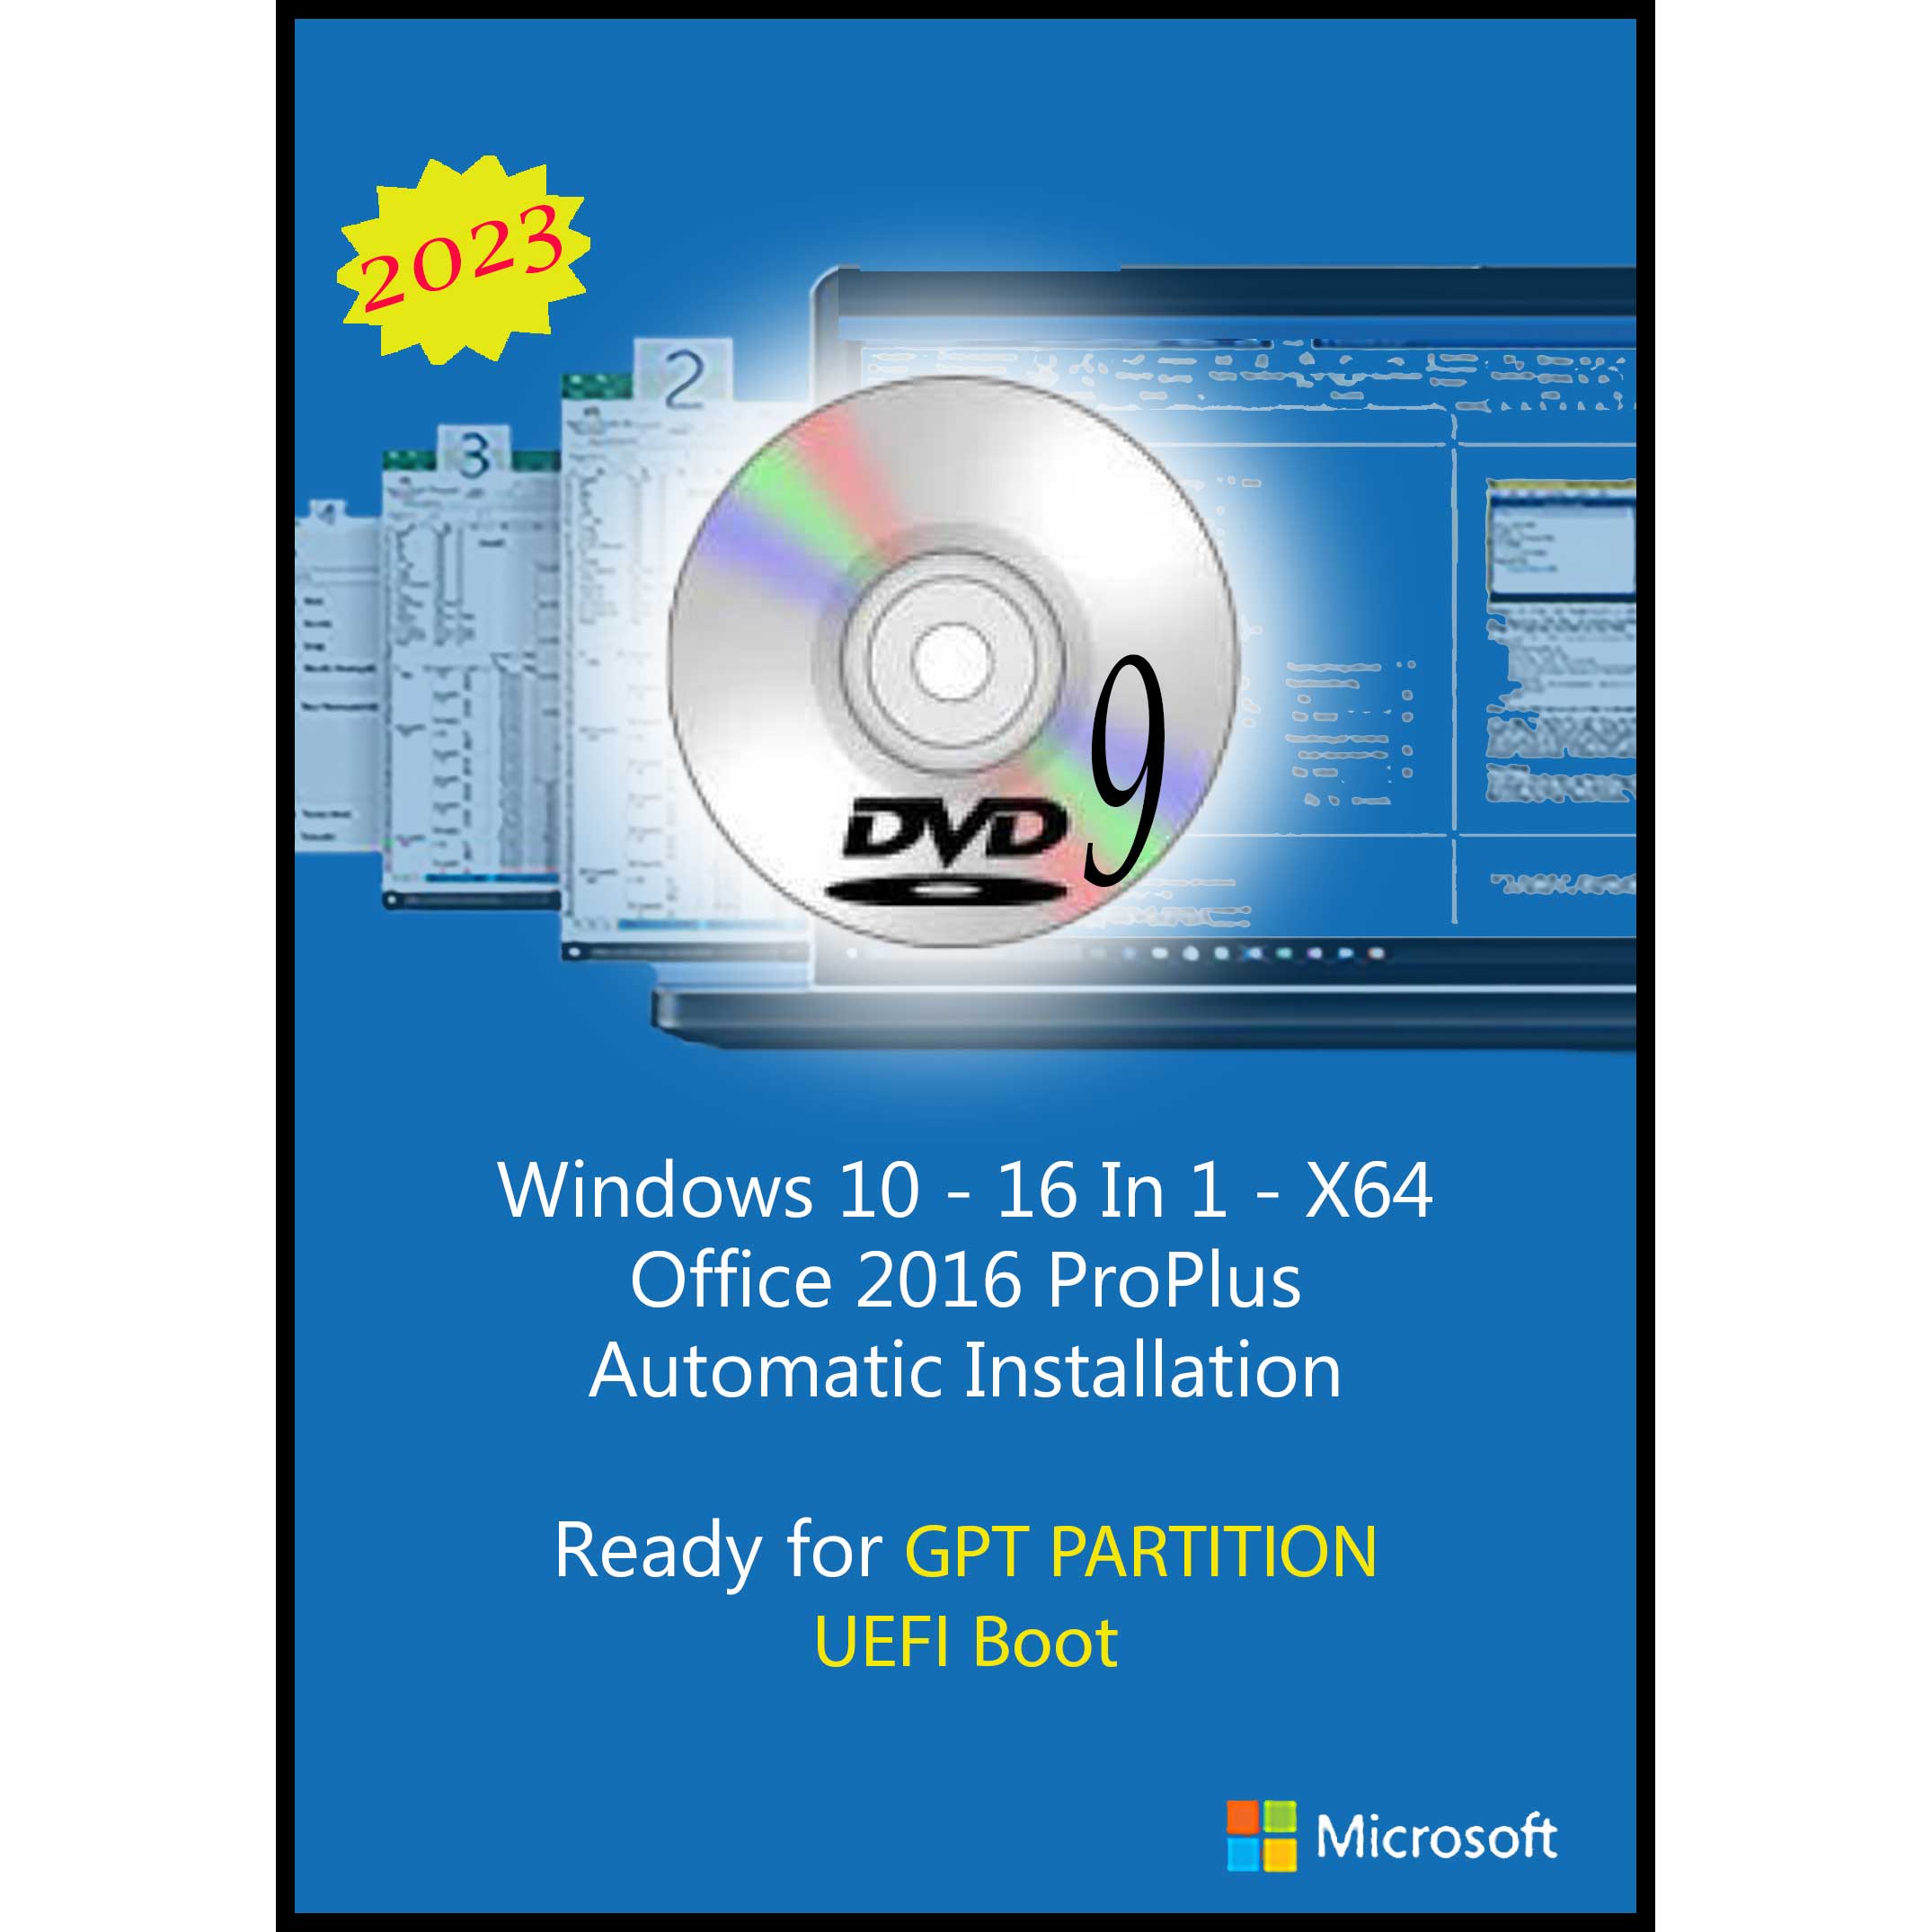 سیستم عامل Windows 10 X64 2023 16 IN 1 UEFI DVD 9 - Office 2016 Pro Plus نشر مایکروسافت